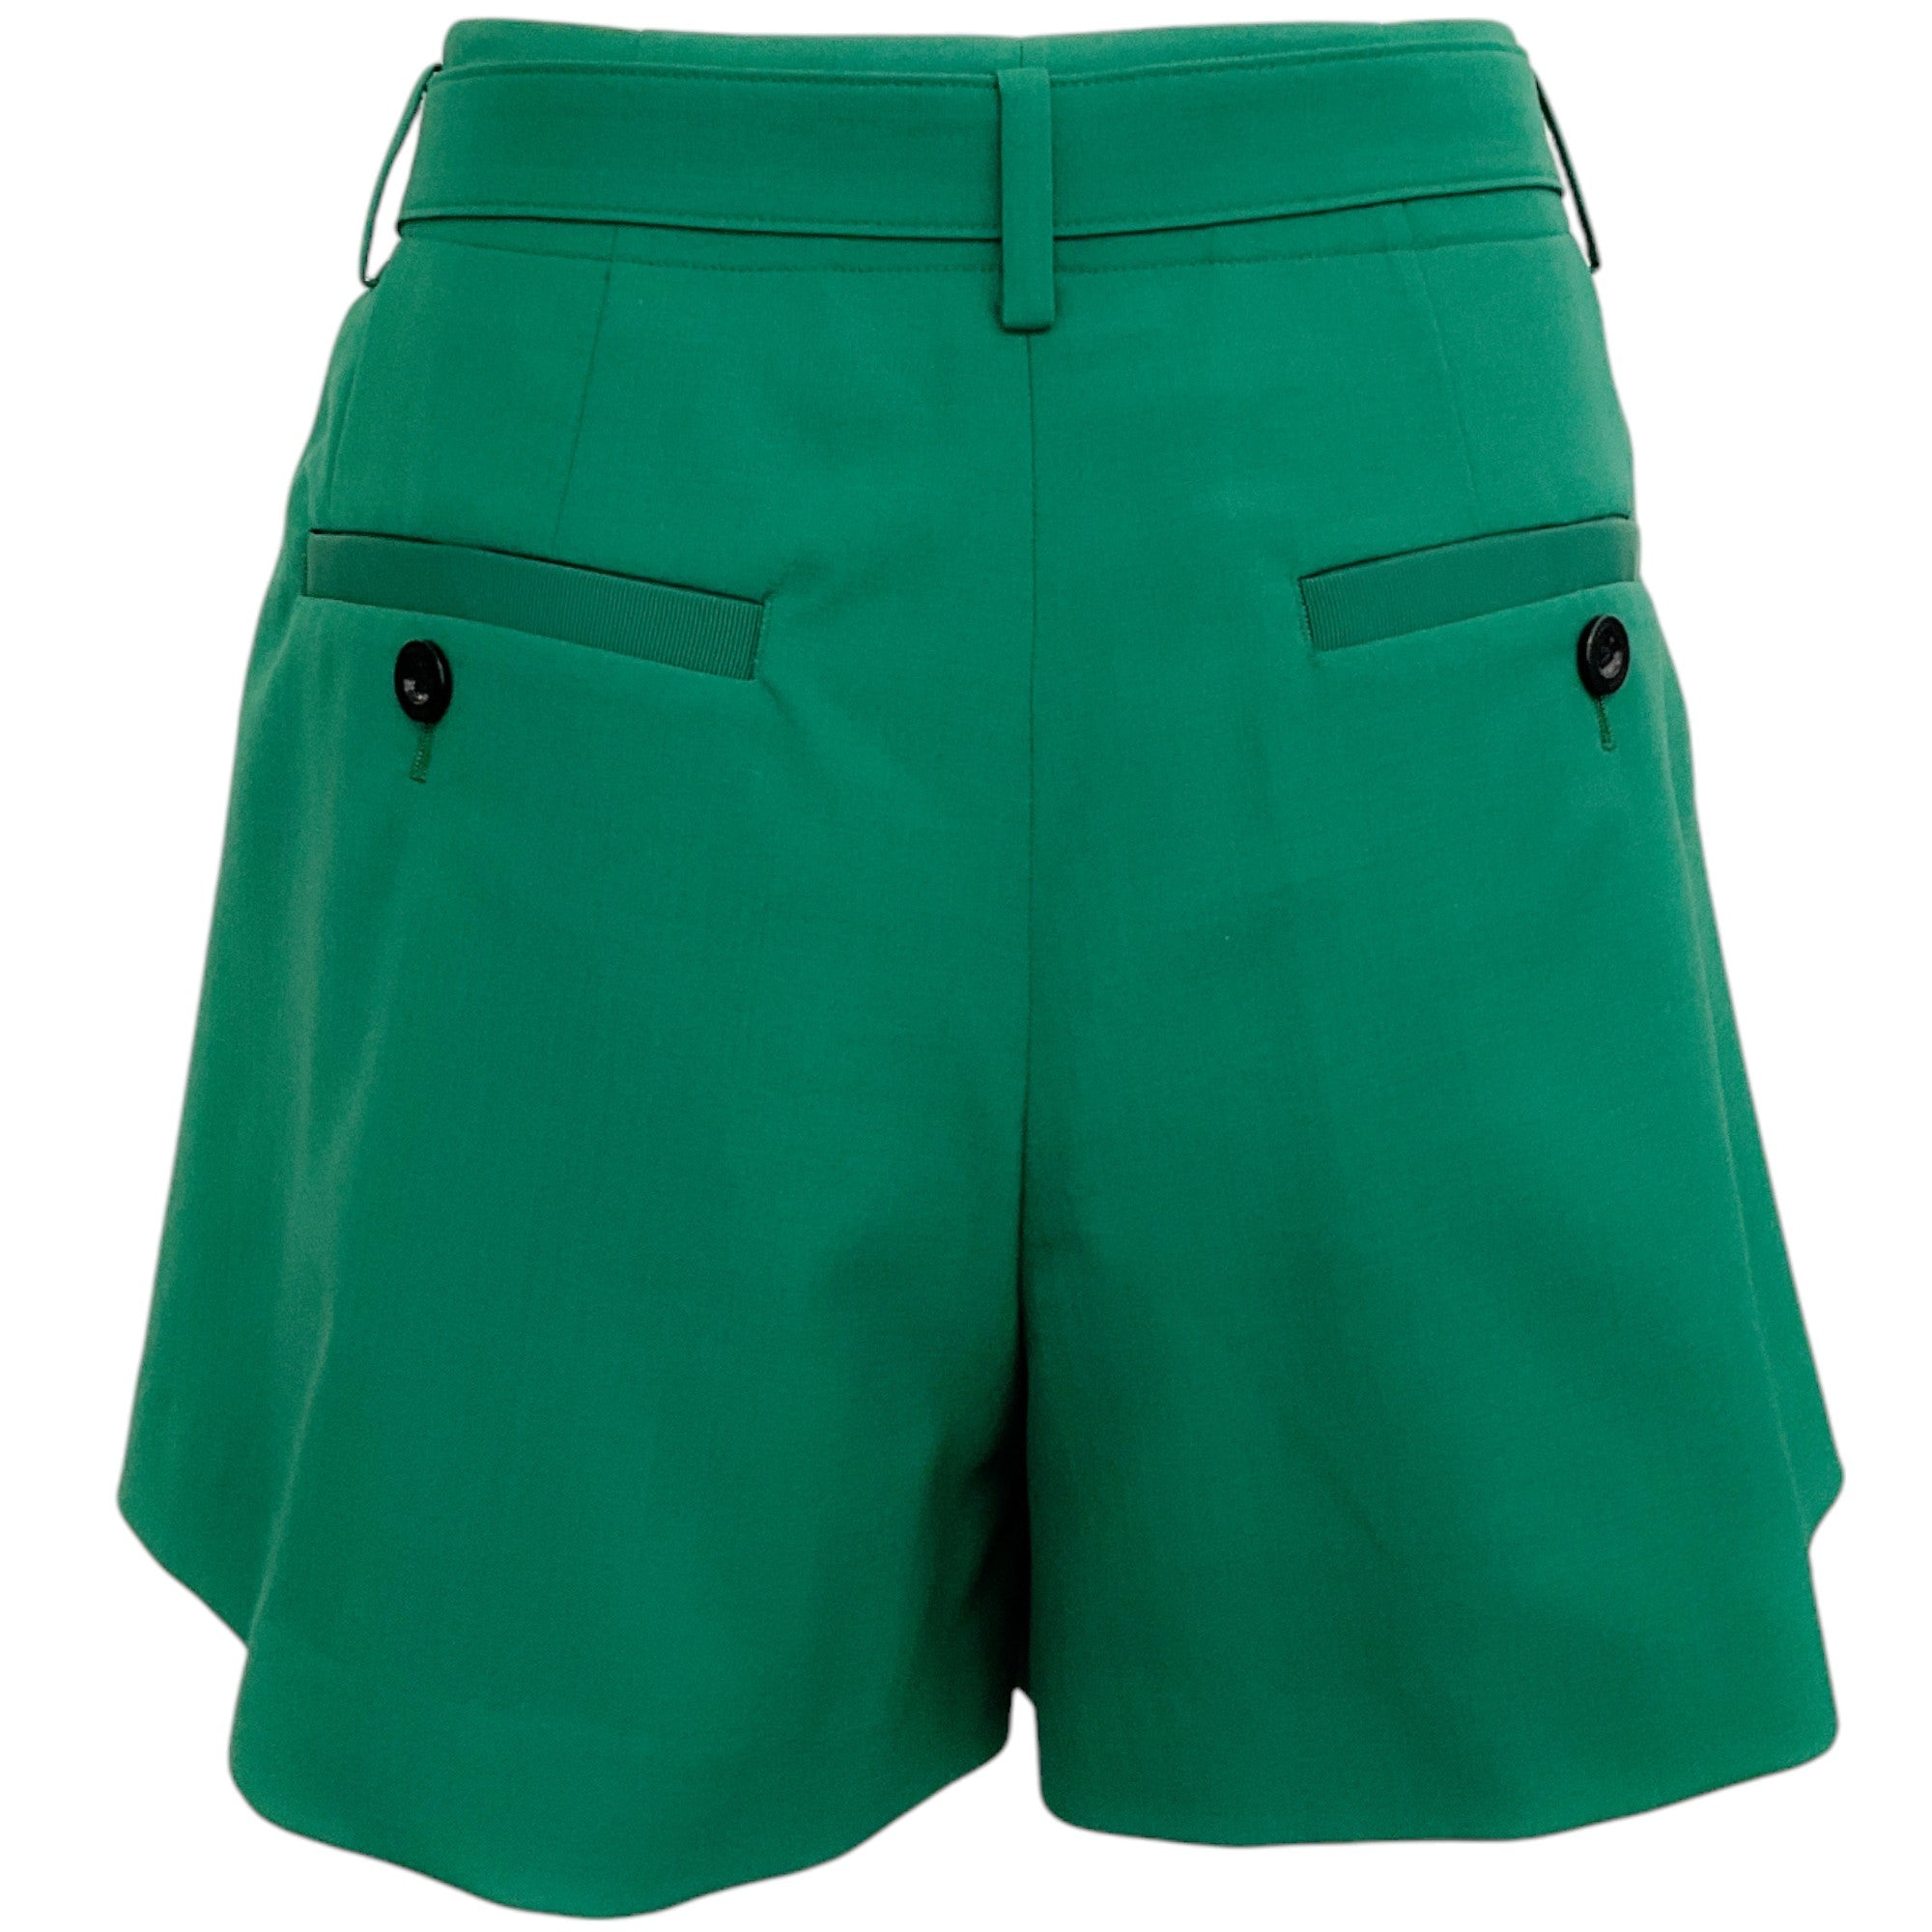 Sacai Green Wool Tuxedo Shorts with Belt